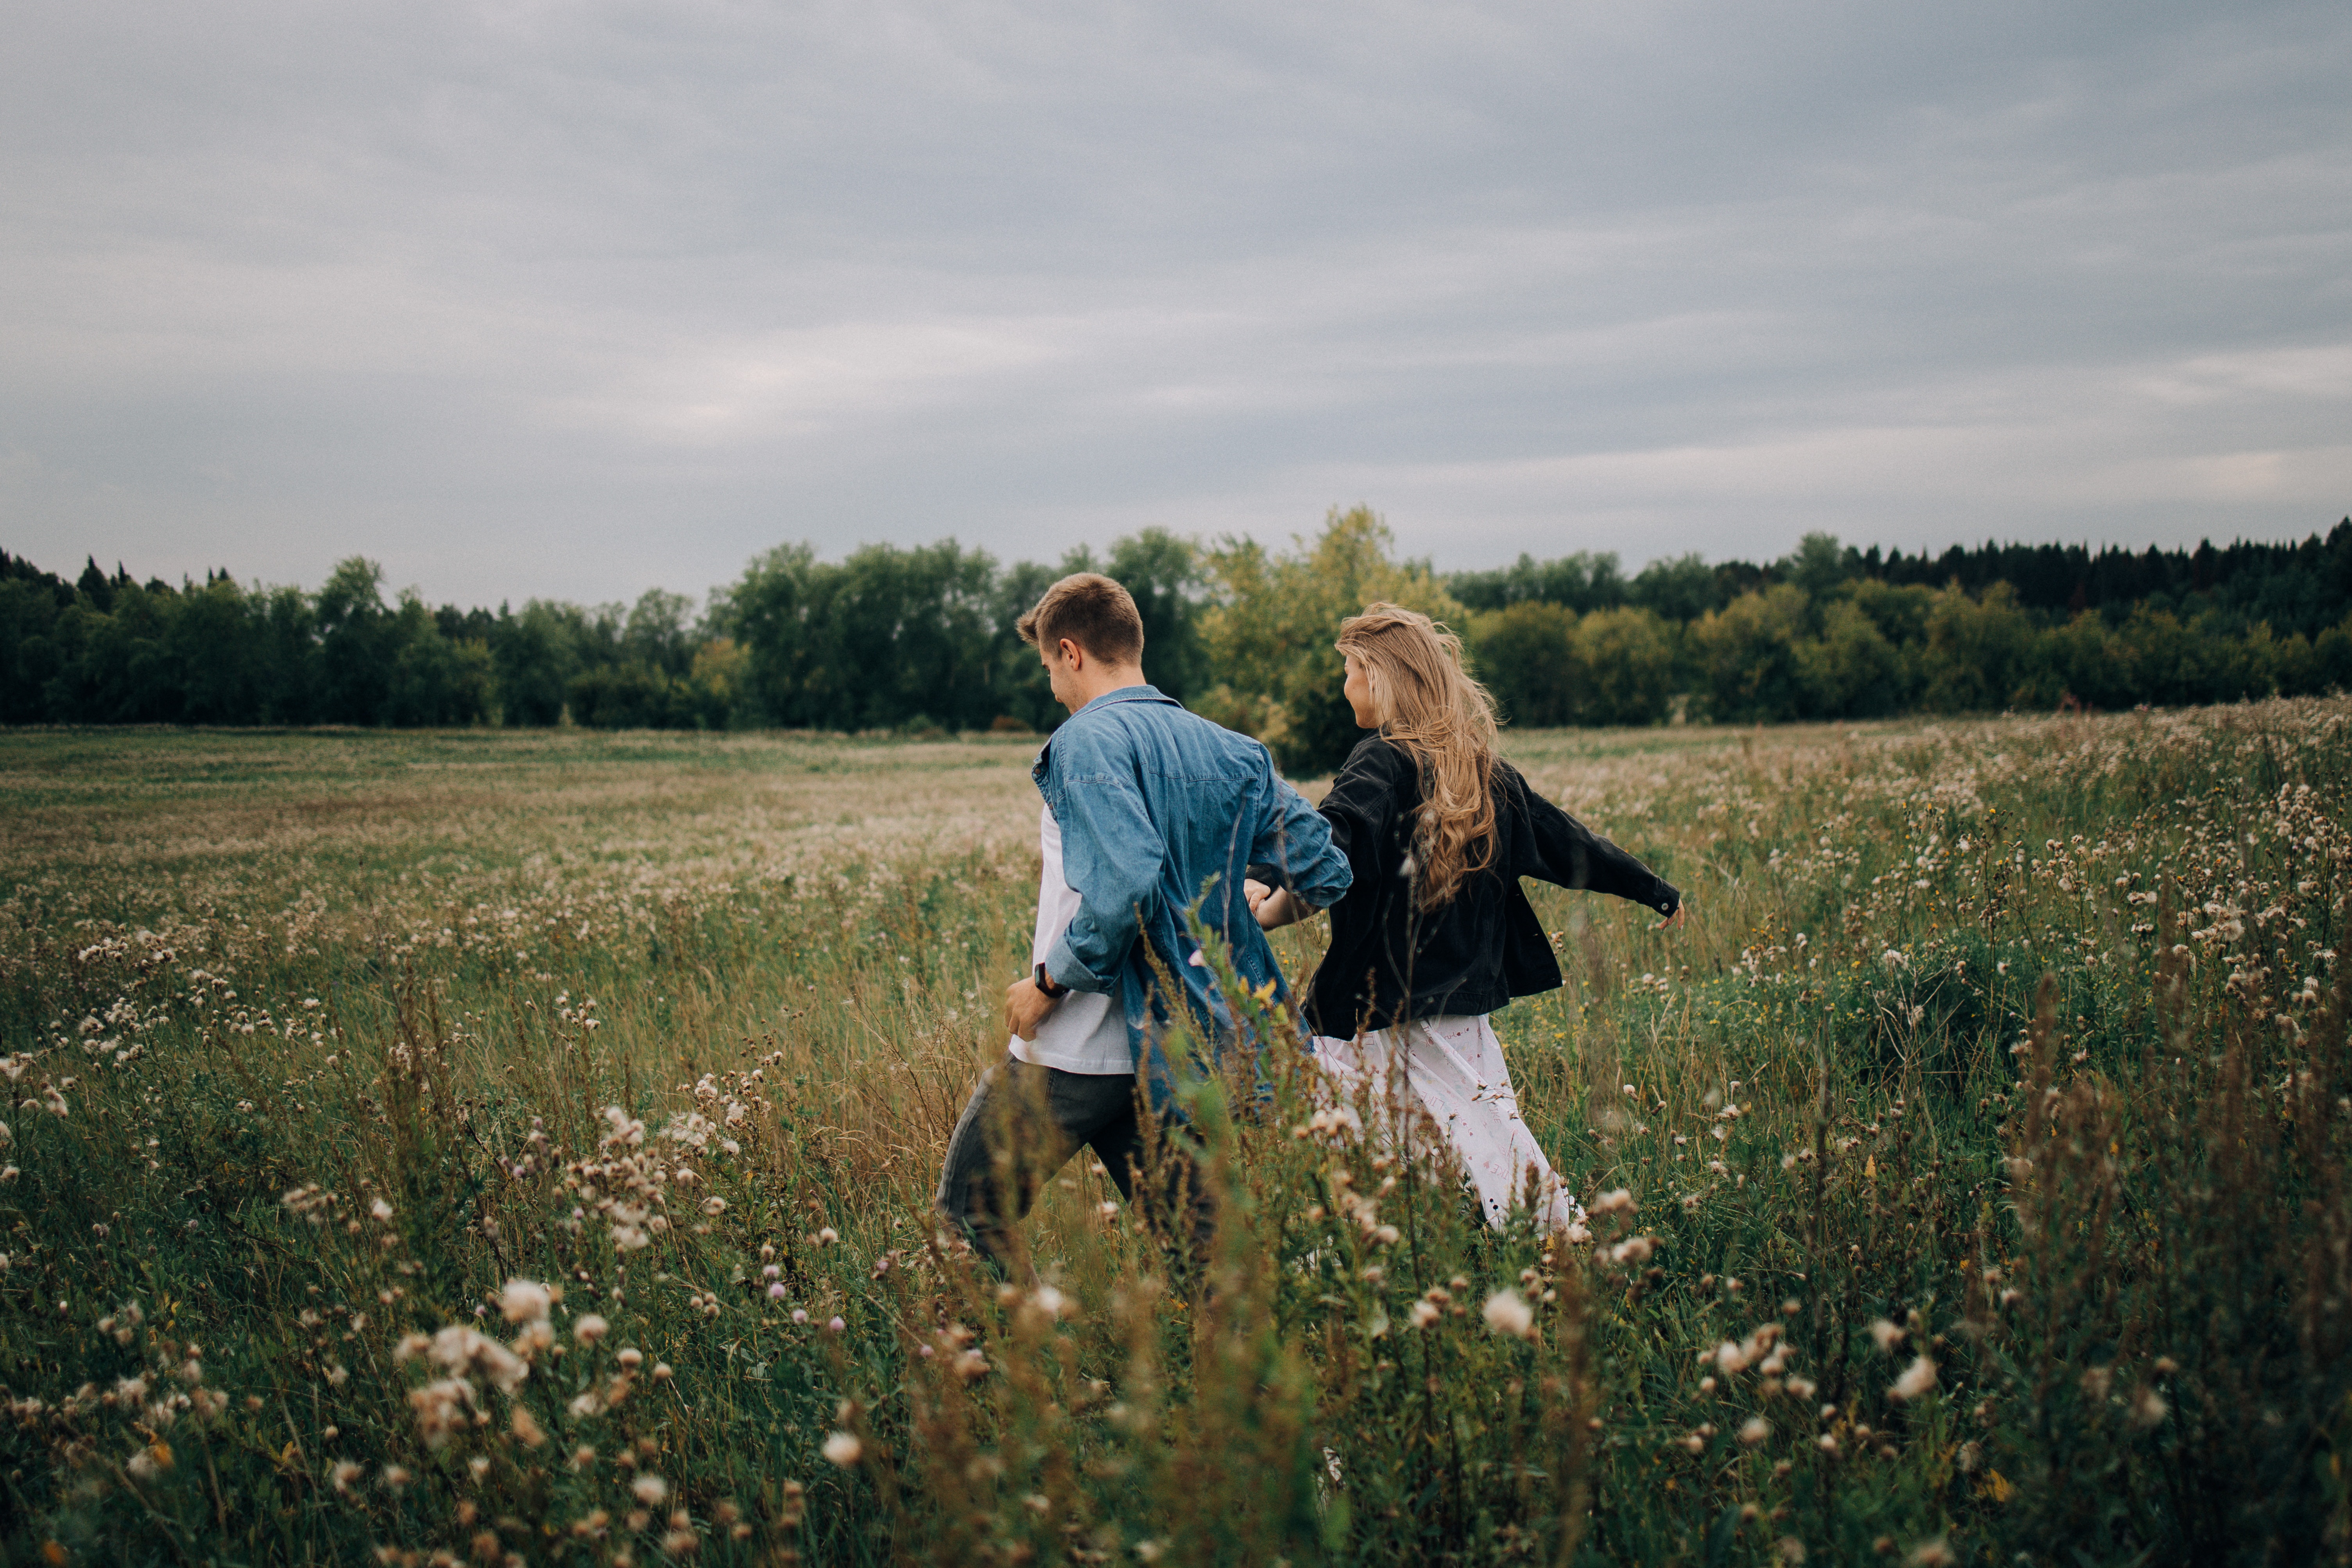 Couple running through a field | Source: Pexels